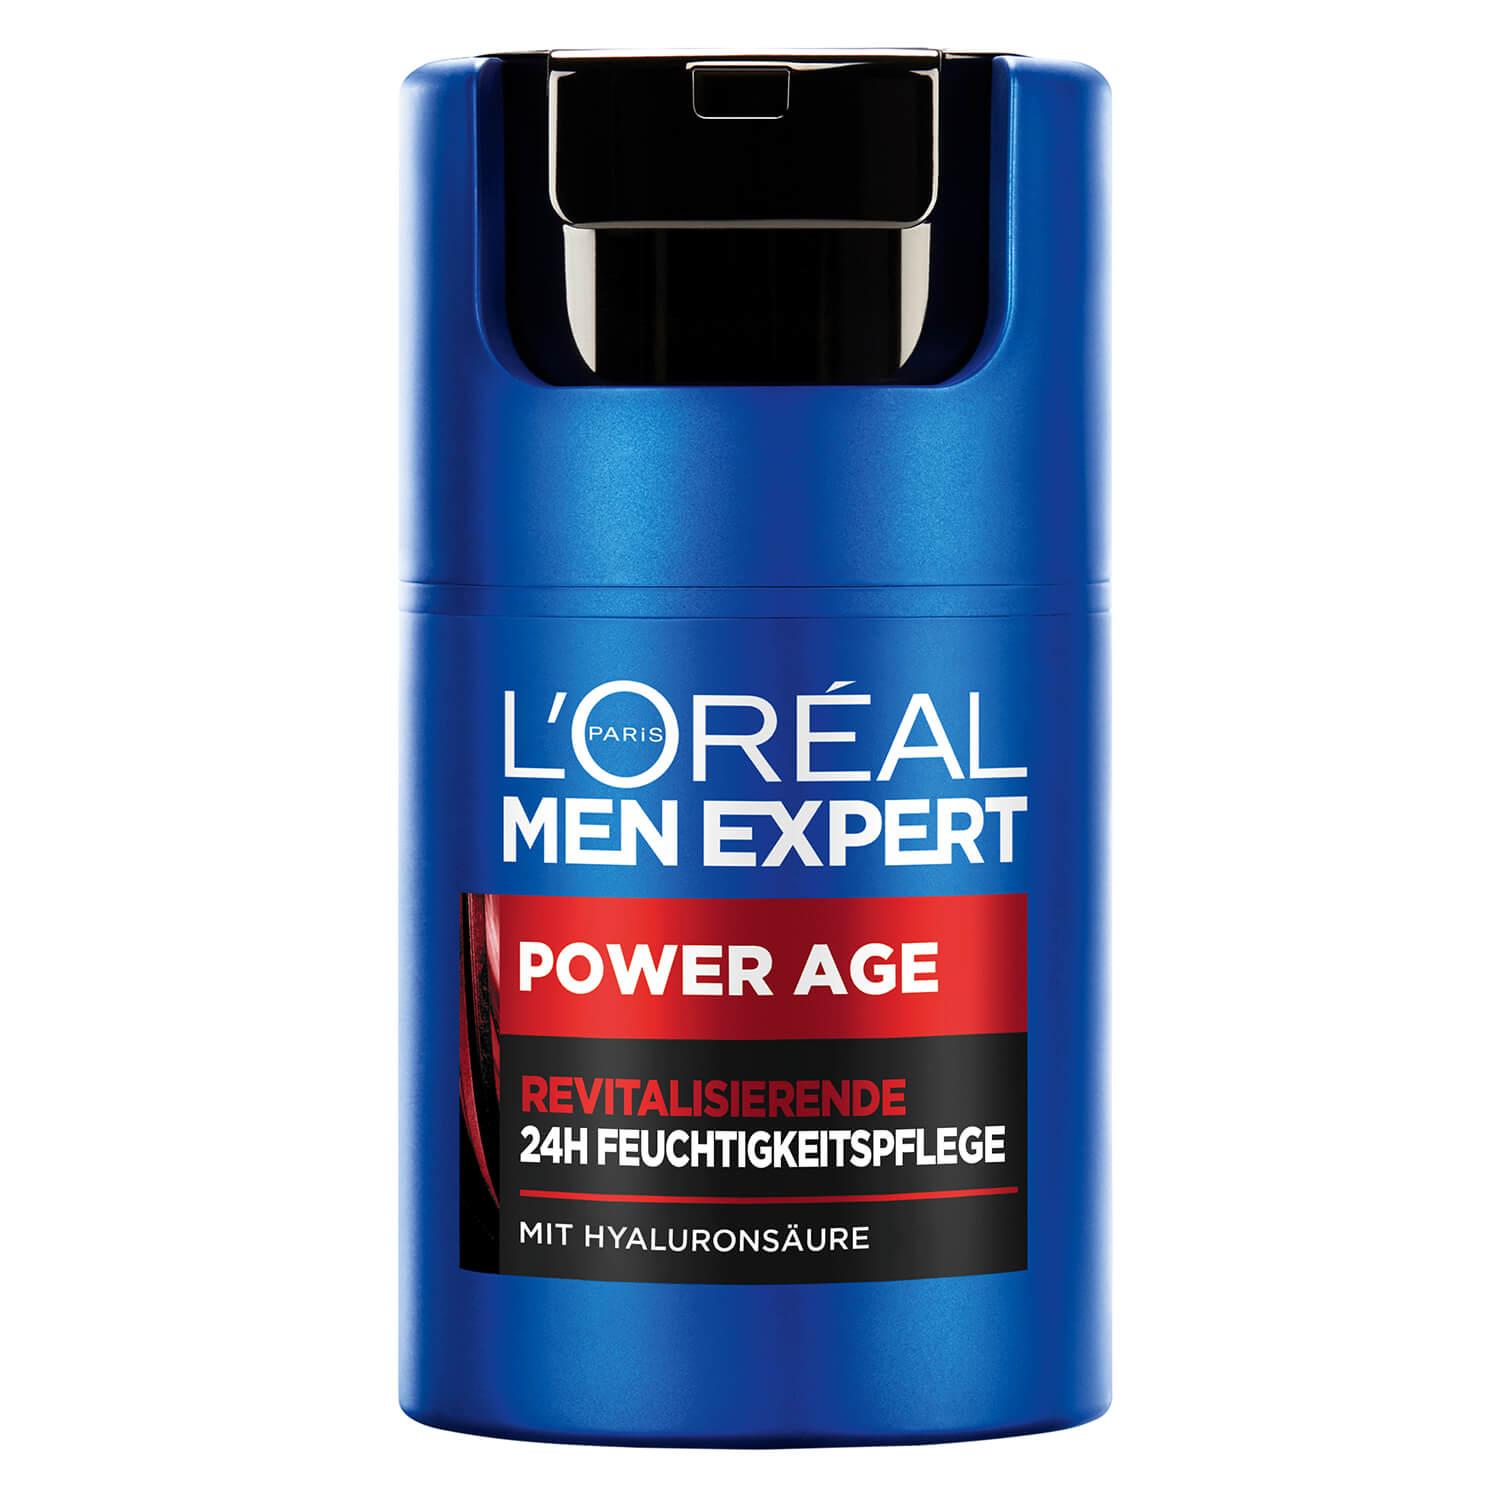 LOréal Men Expert - X3 Power Age Revitalisierende 24h Feuchtigkeitspflege